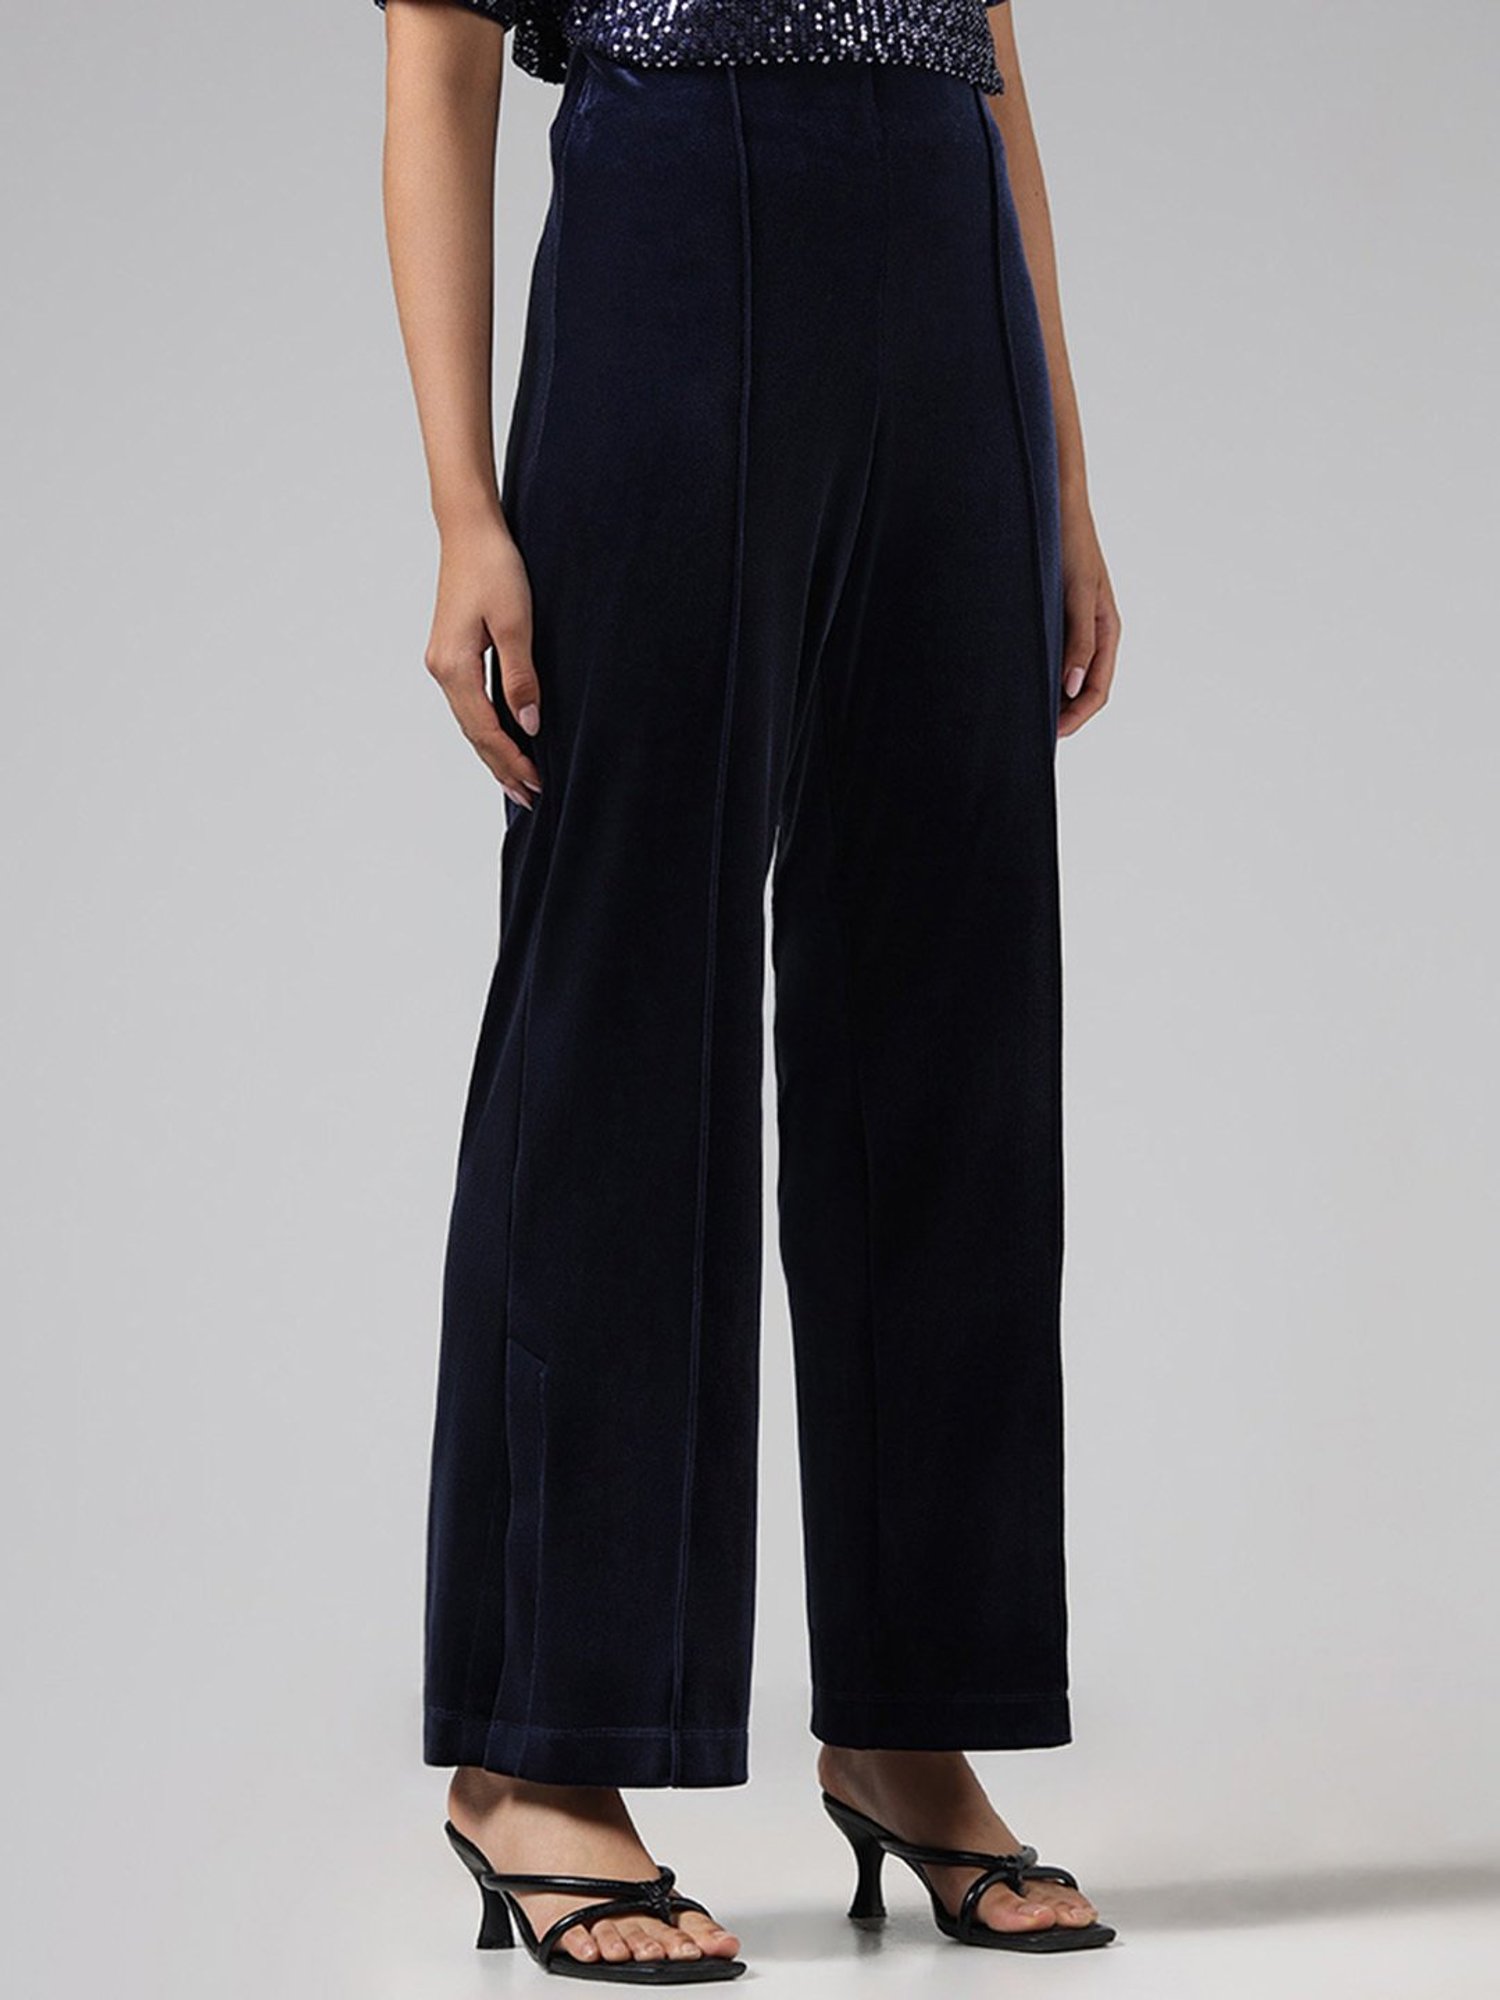 Women's Velvet Pants | Made to Measure | $99 - Sumissura